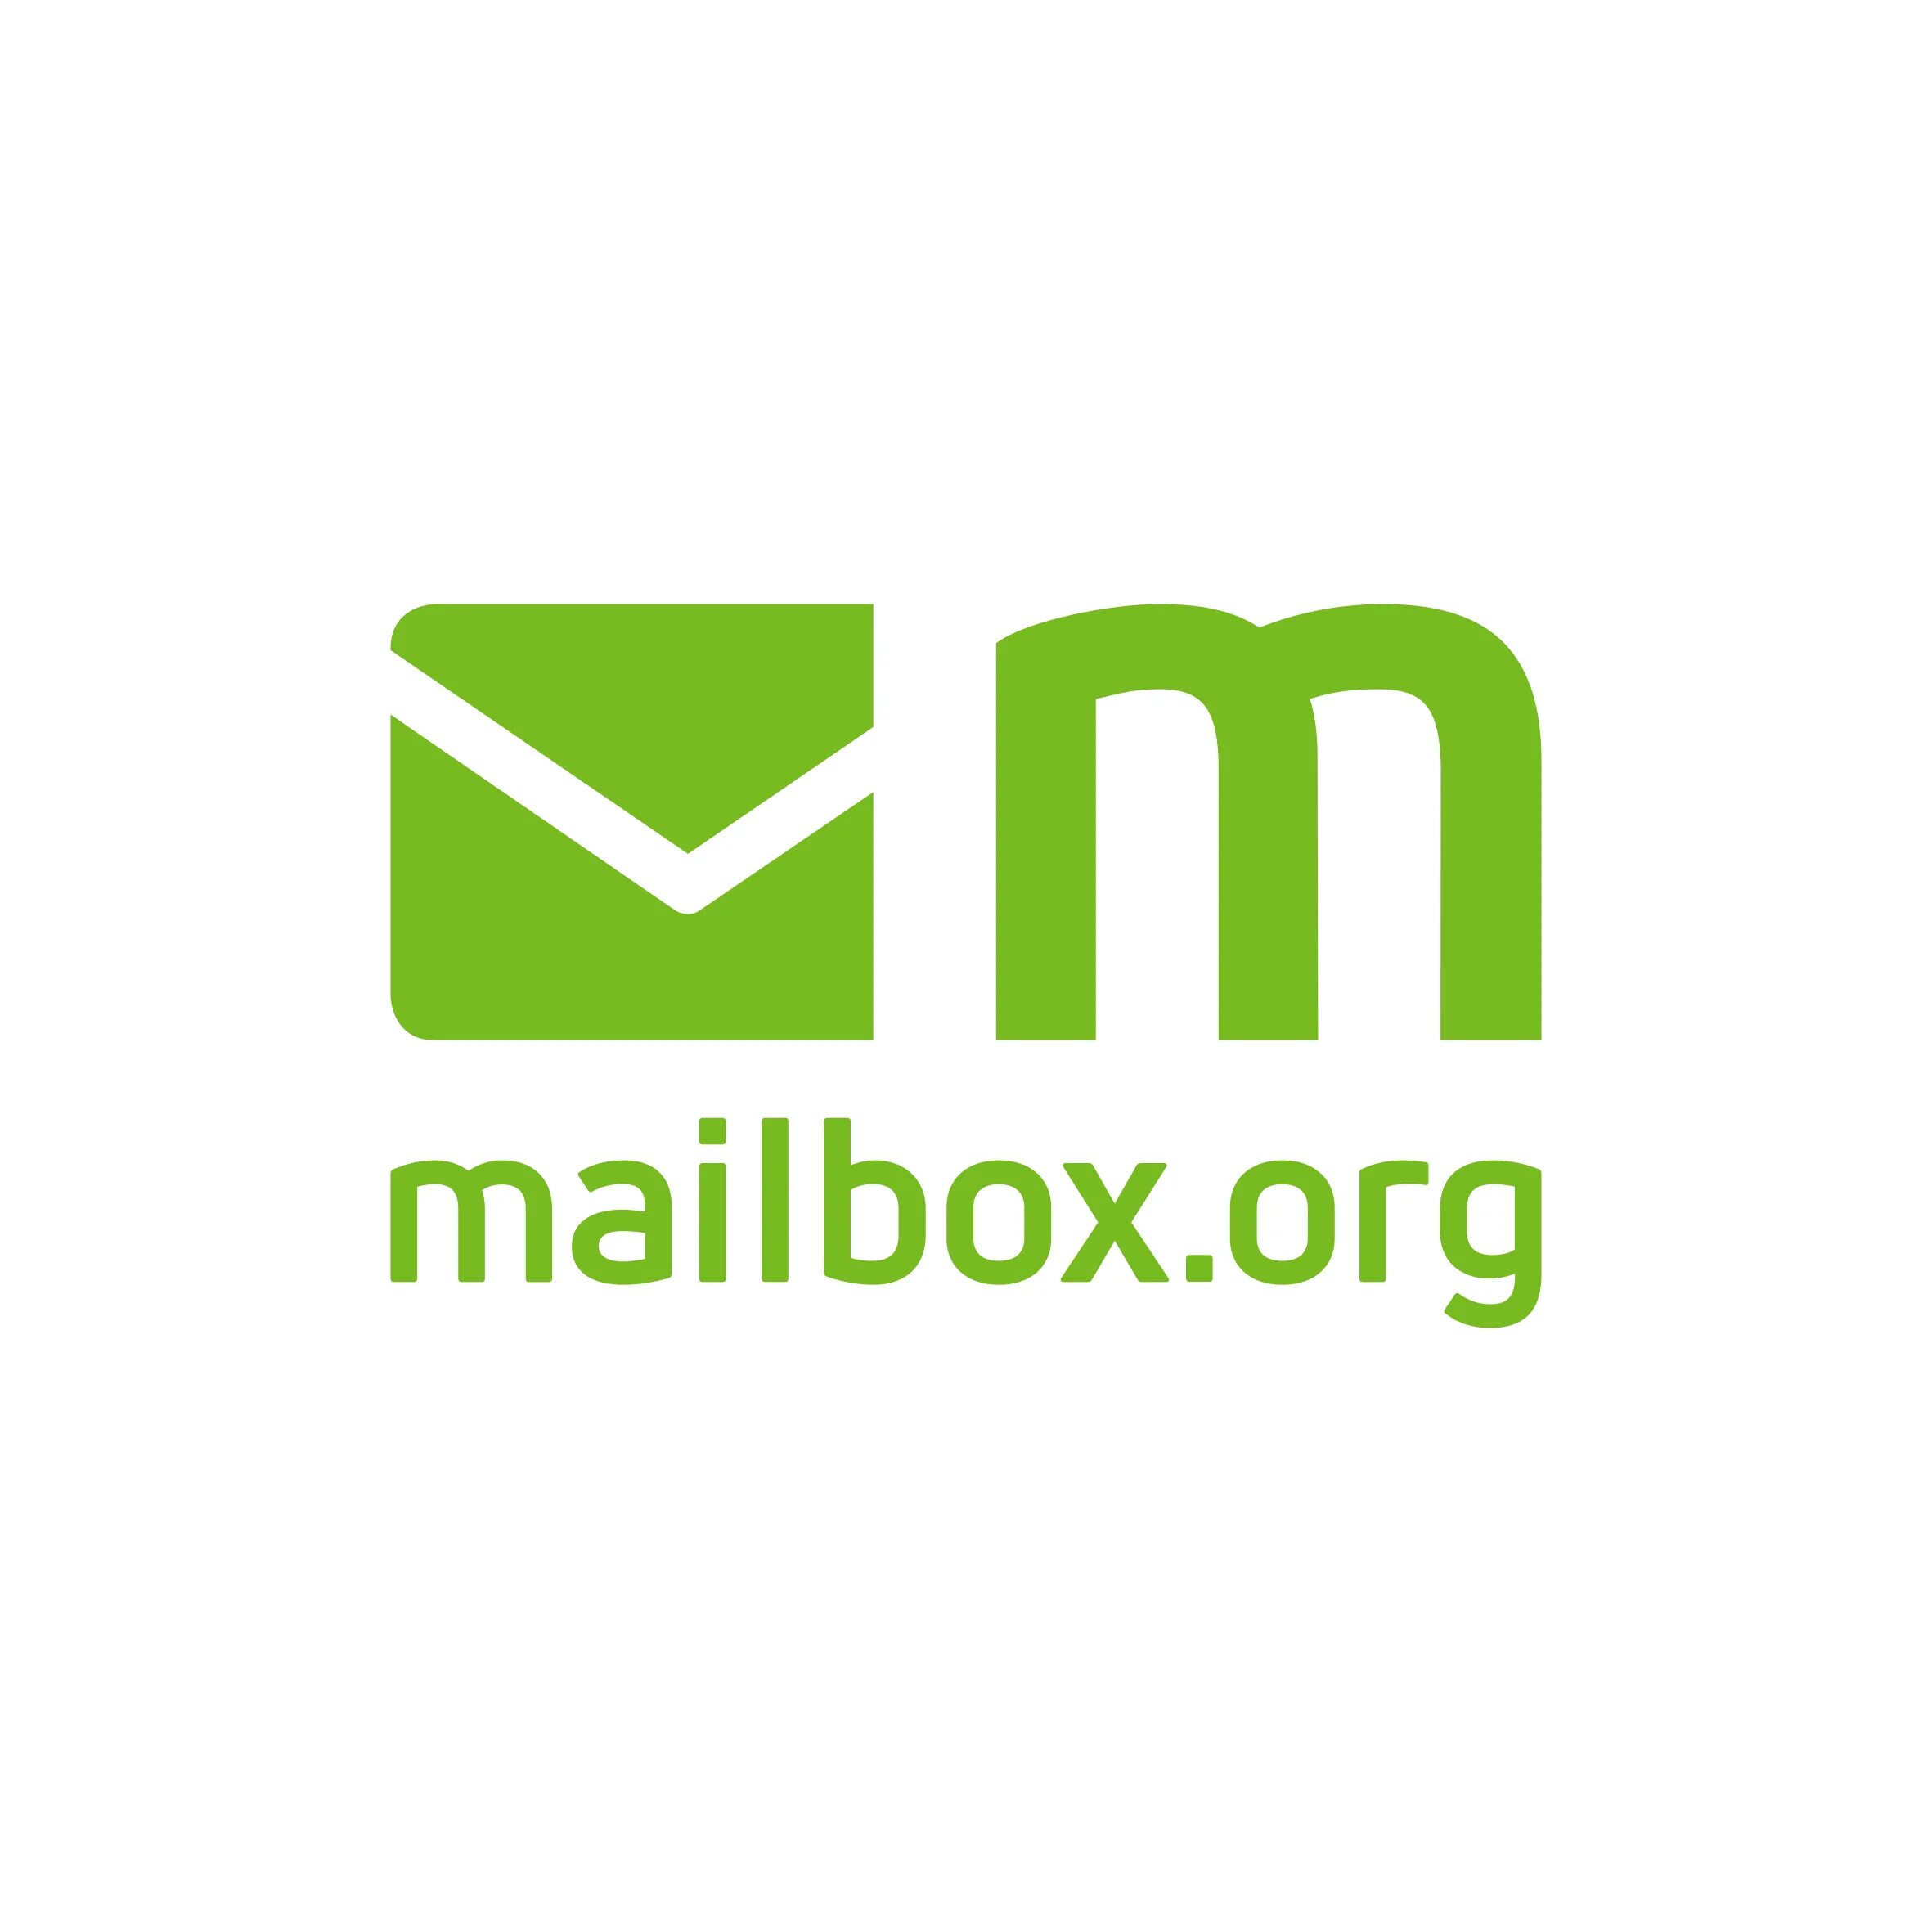 Mailbox hosting. .Org. Mailbox.org. Mailbox логотип. Orr.